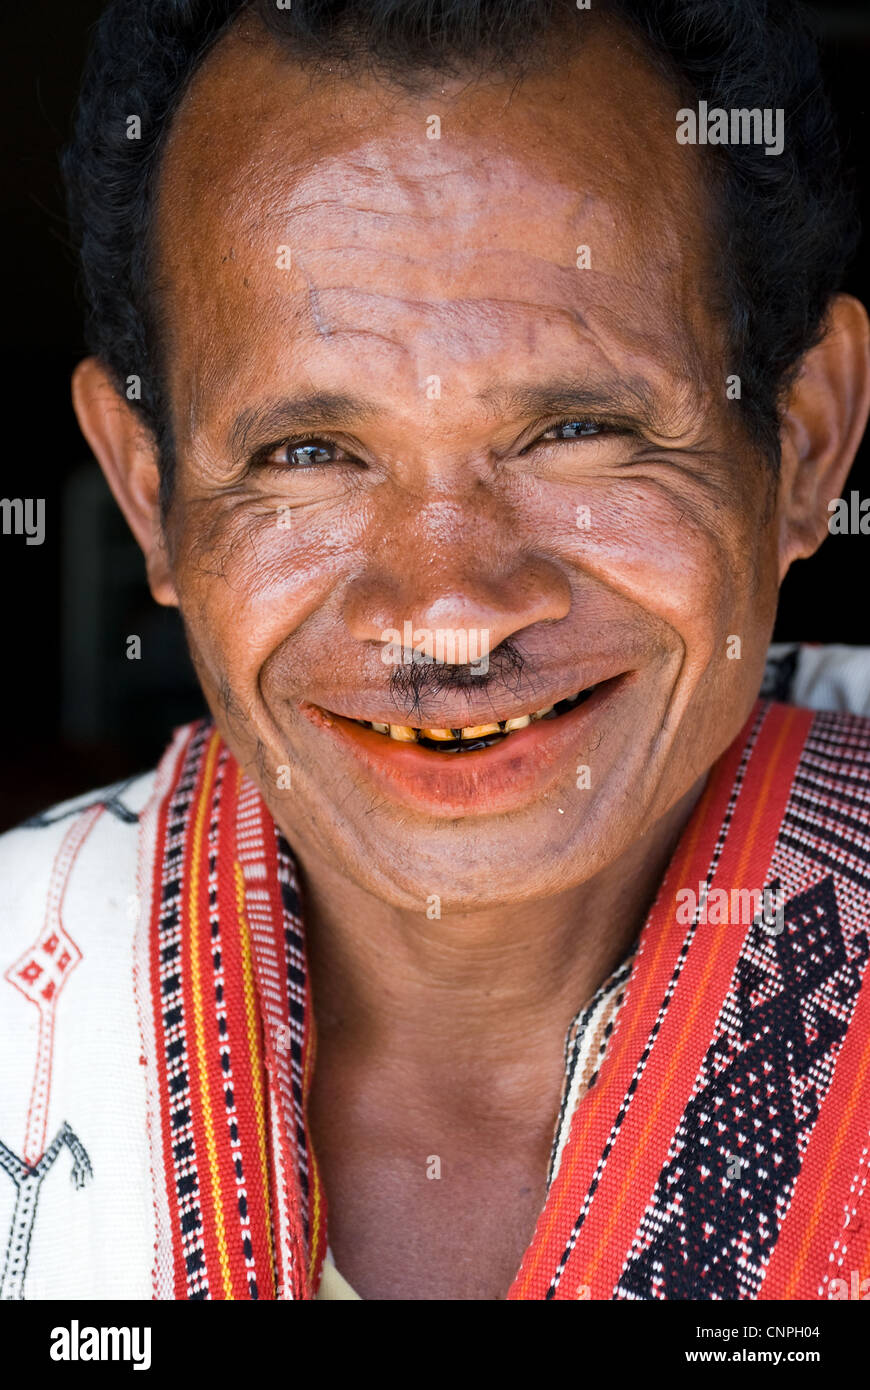 ketum man in kupang, west timor, indonesia Stock Photo